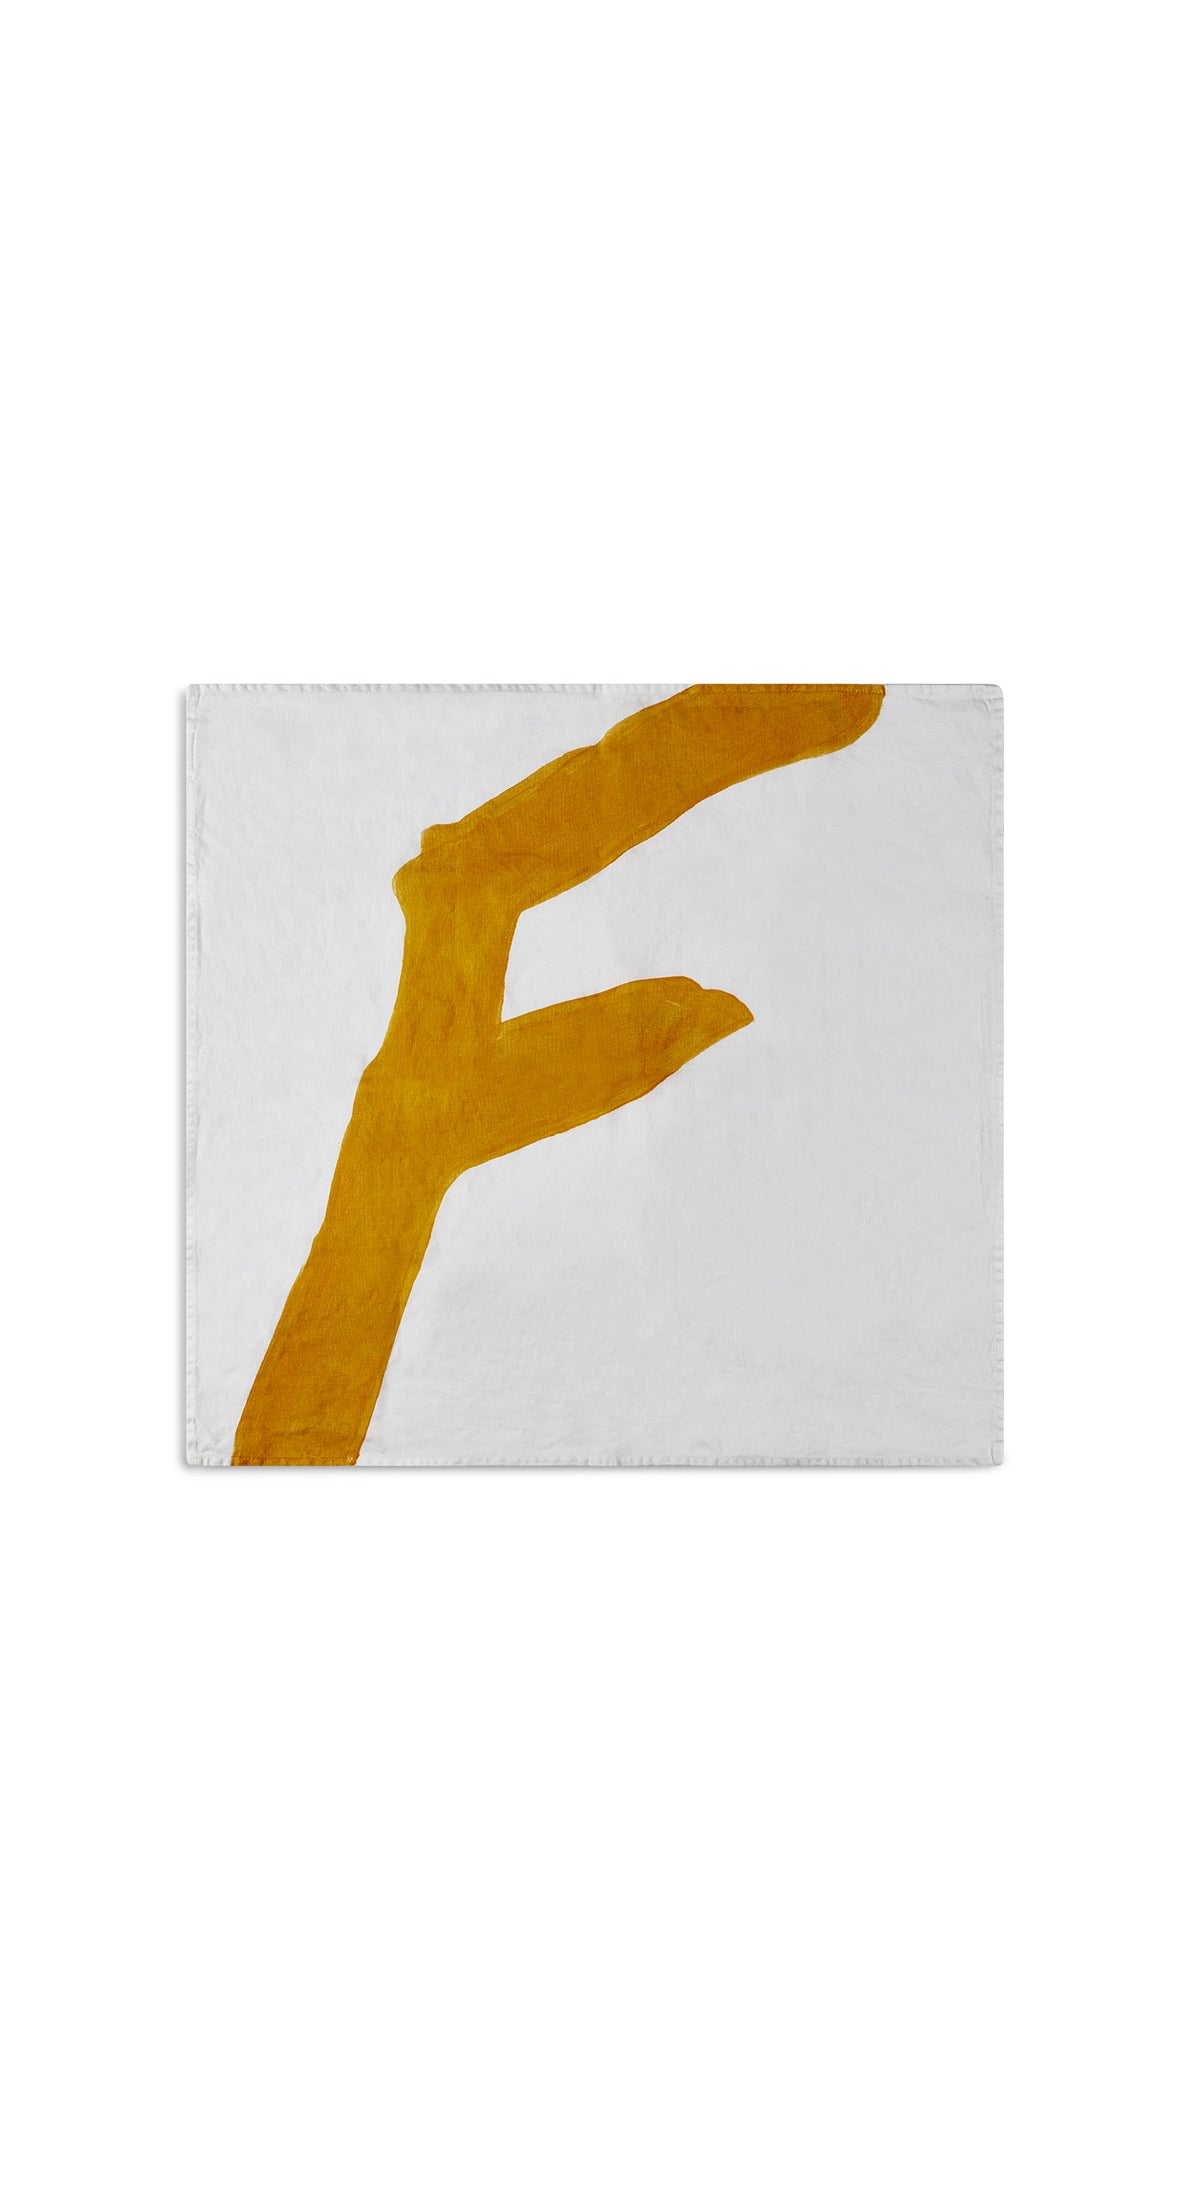 Alphabet Napkin 'F' in Mustard Yellow, 50x50cm